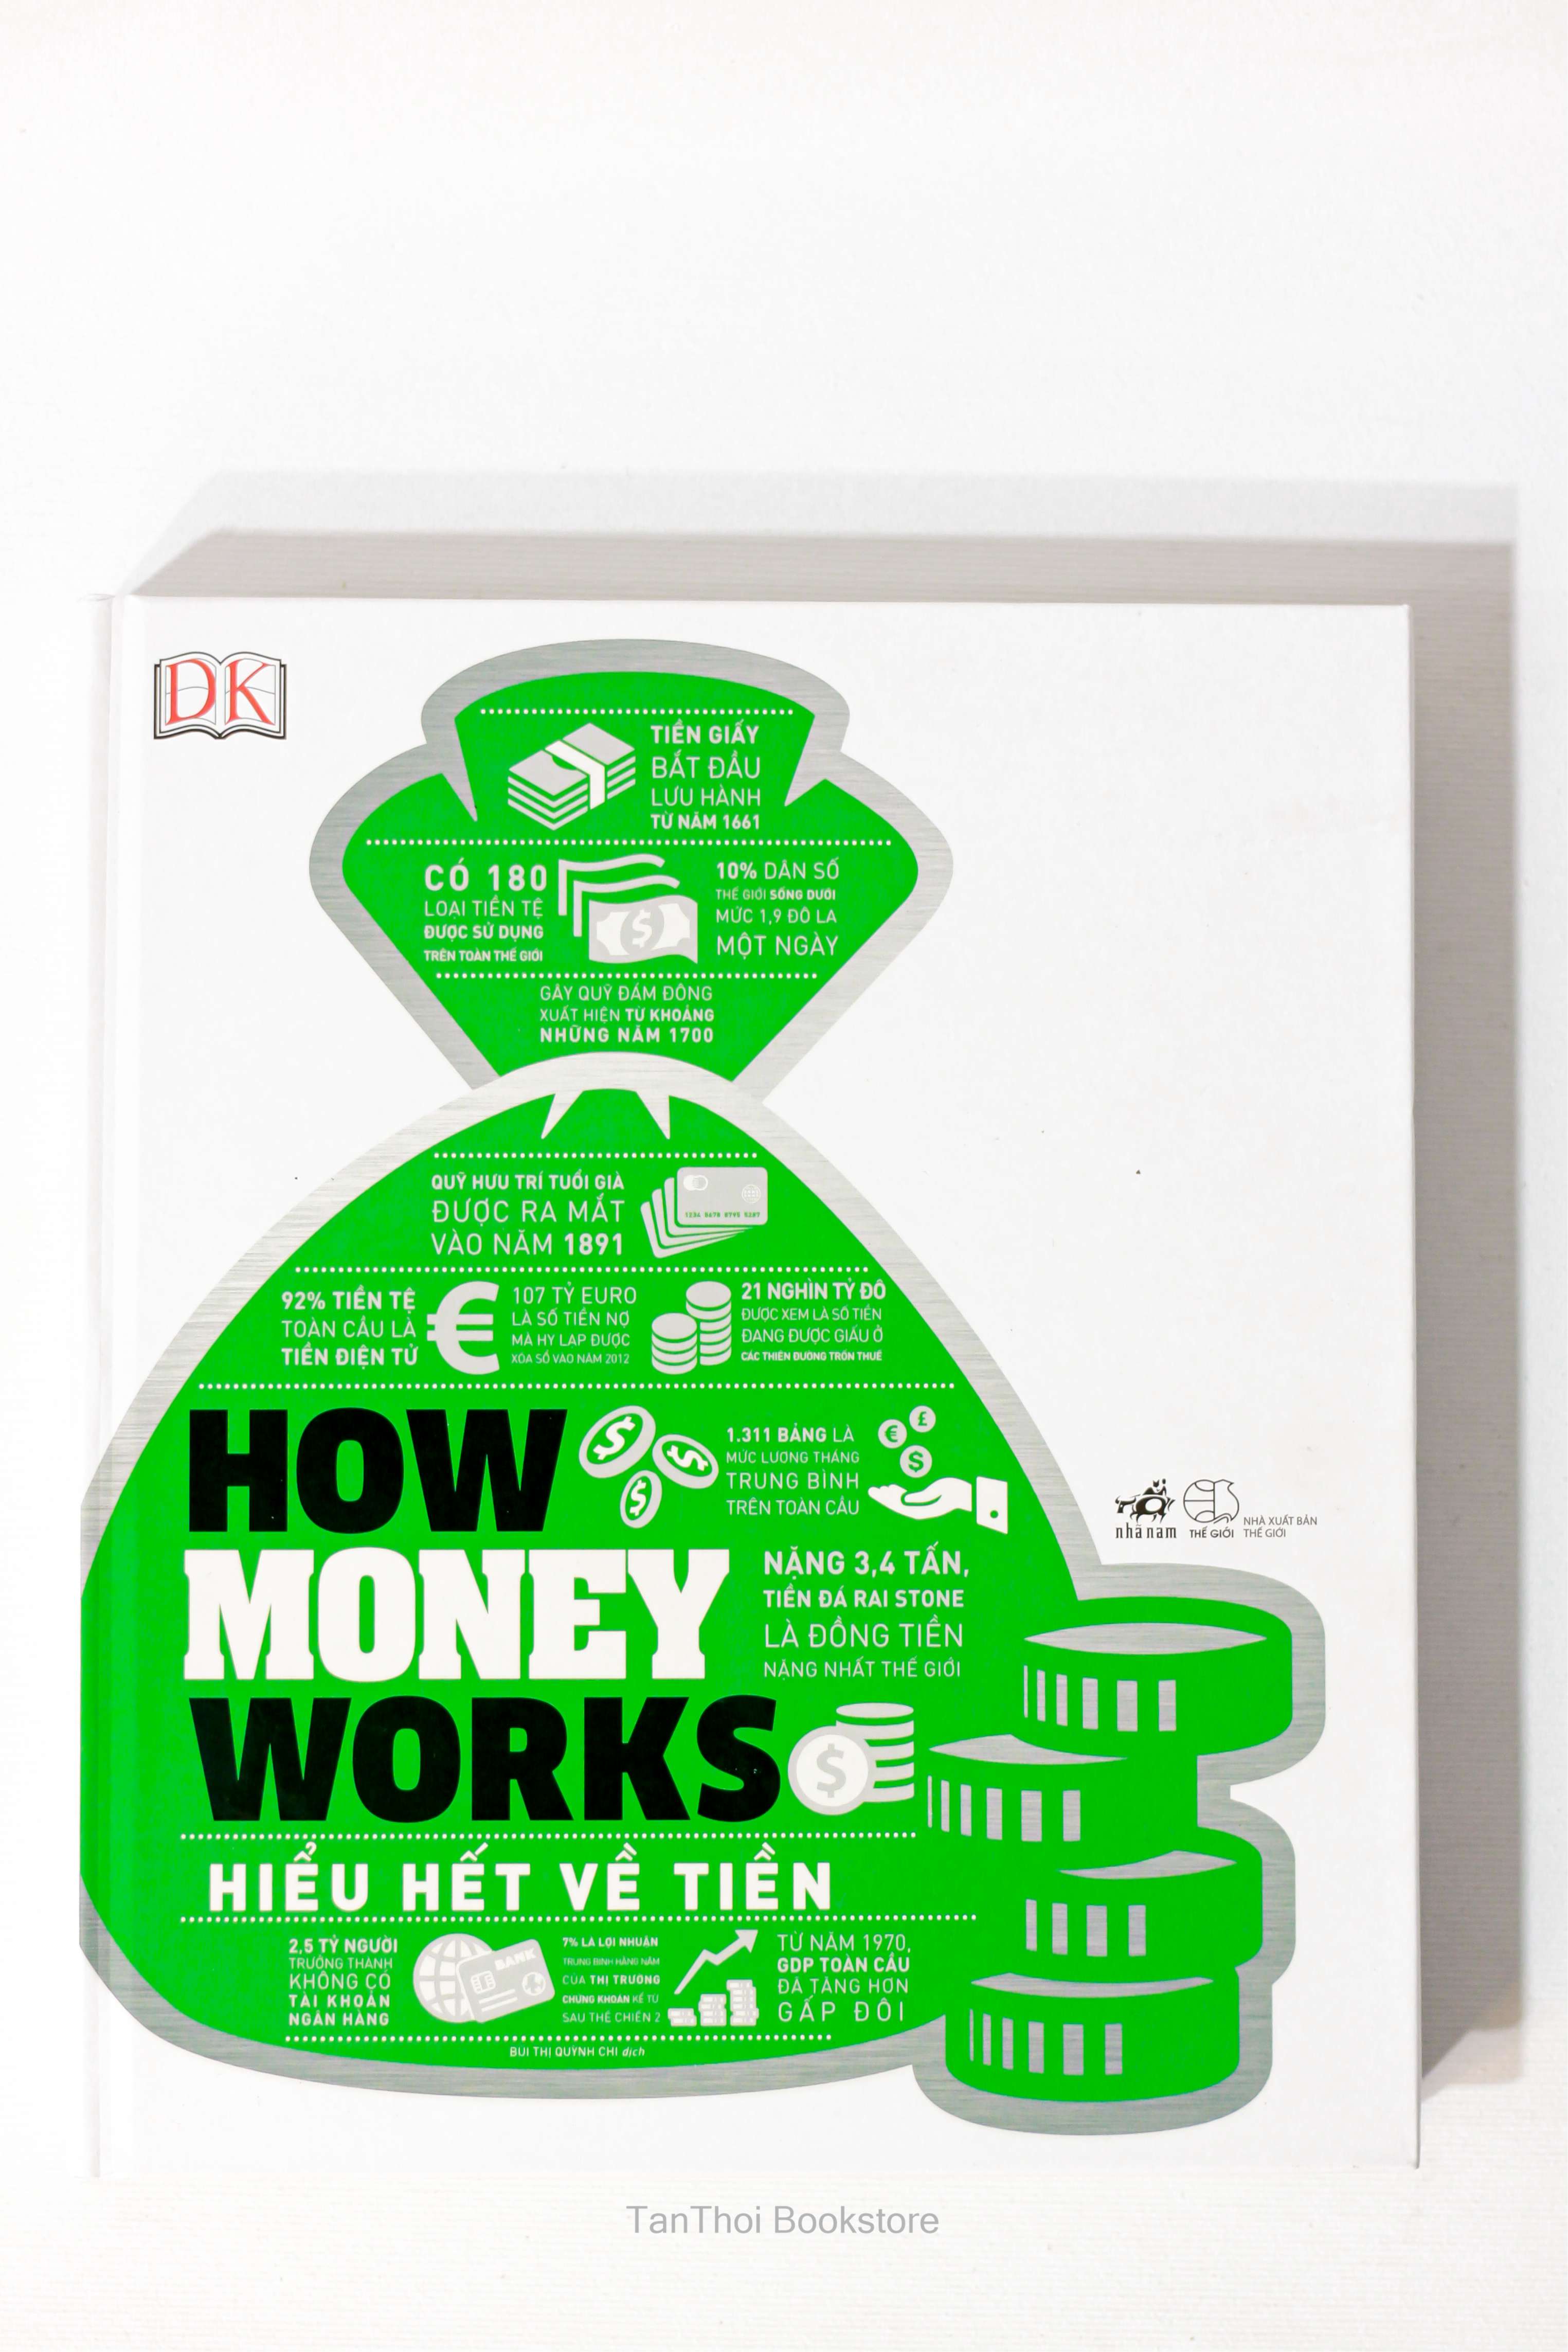 How money works - Hiểu hết về tiền